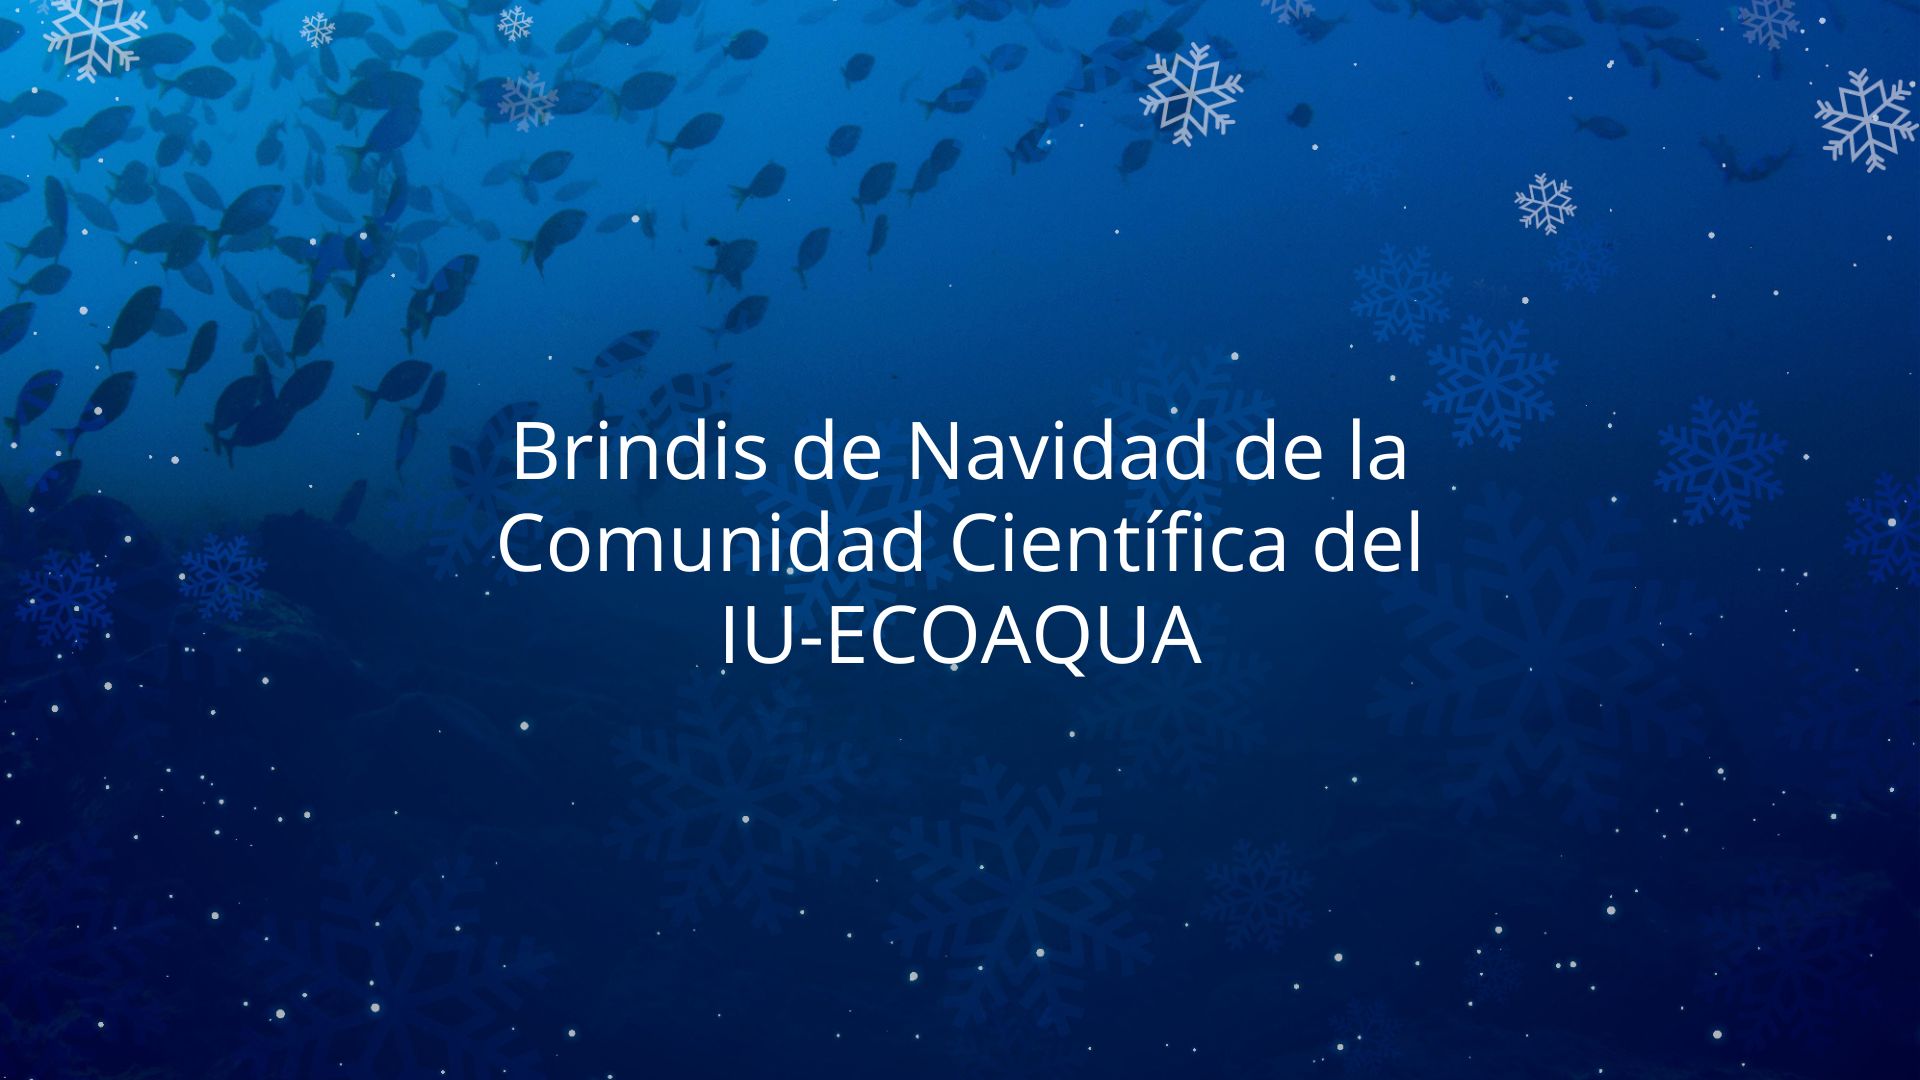 Christmas Cocktail of the Scientific Community of IU-ECOAQUA